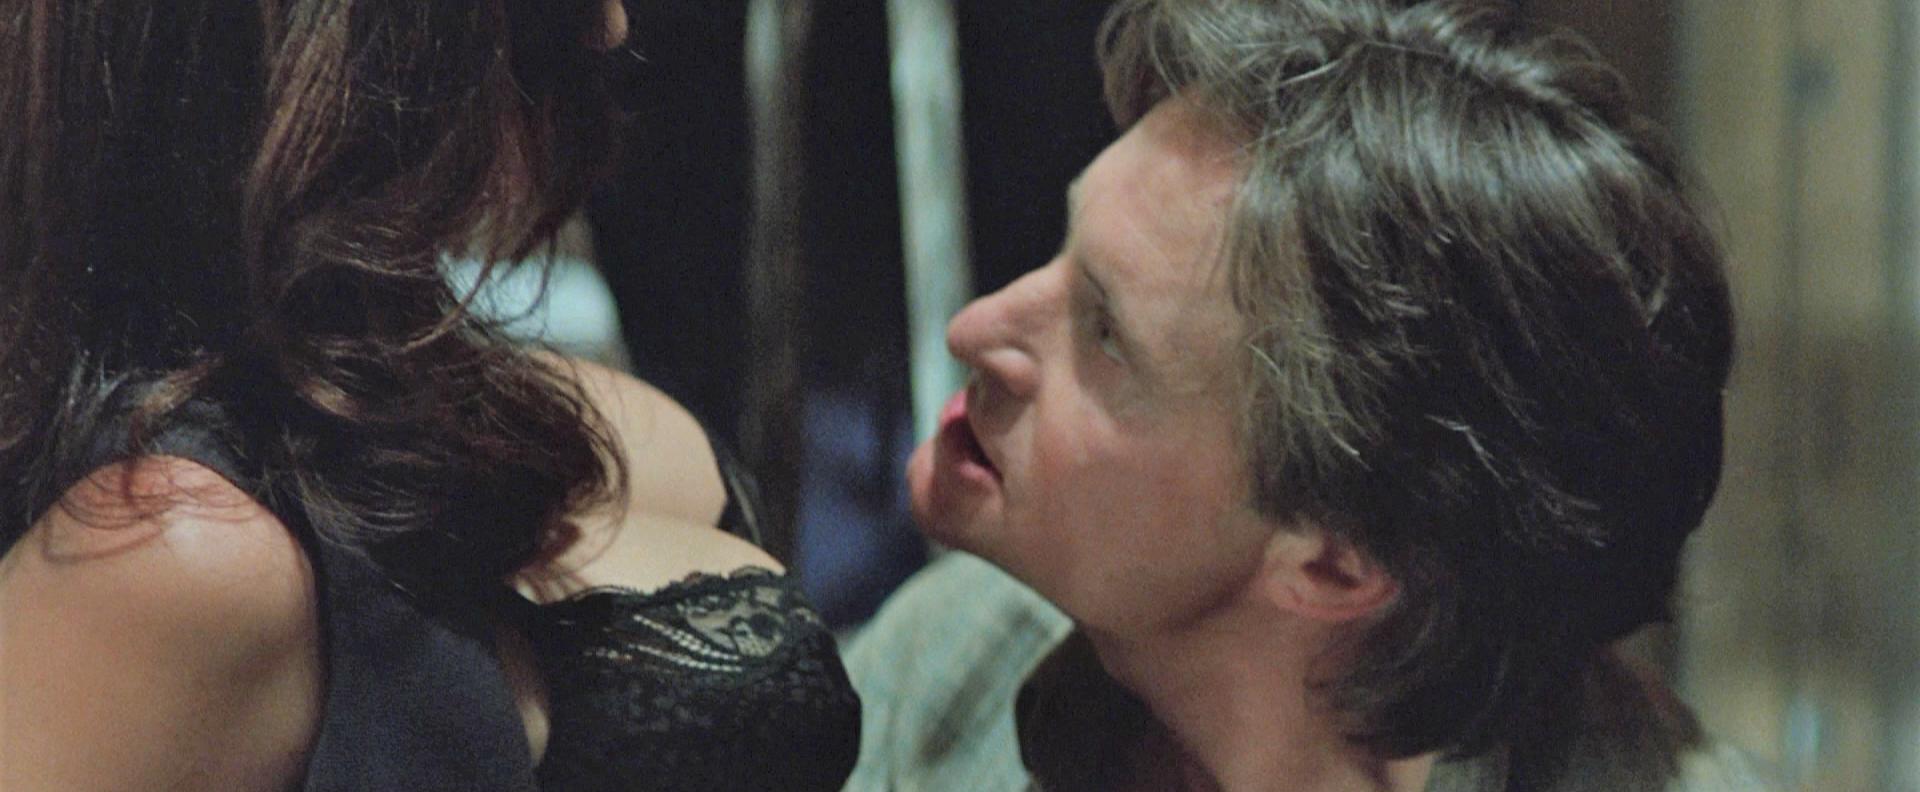 christopher patrick sullivan share disclosure movie sex scene photos